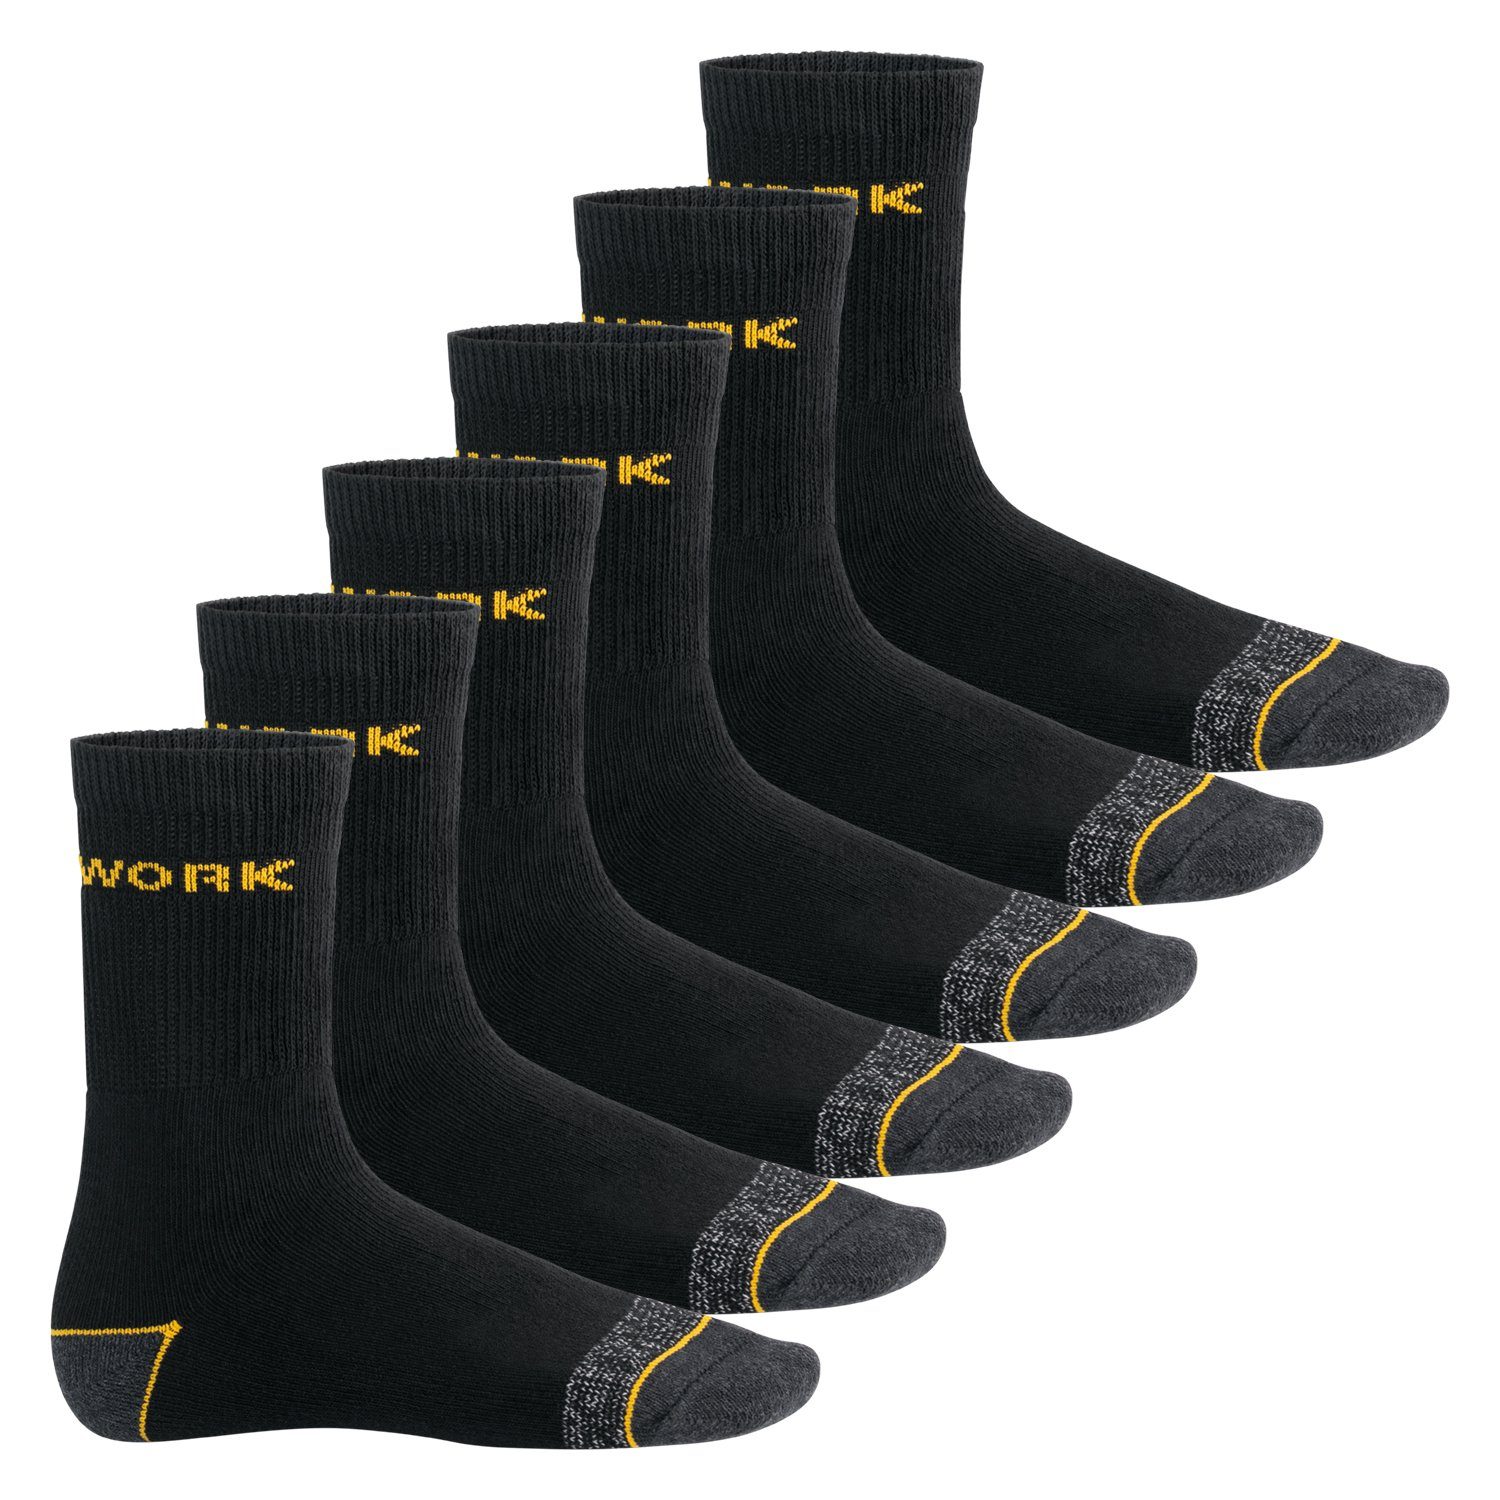 MT Arbeitssocken Herren Socken 6 x Schwarz-Gelb (6/12 robuste Paar), Arbeits-/Freizeitsocken Work